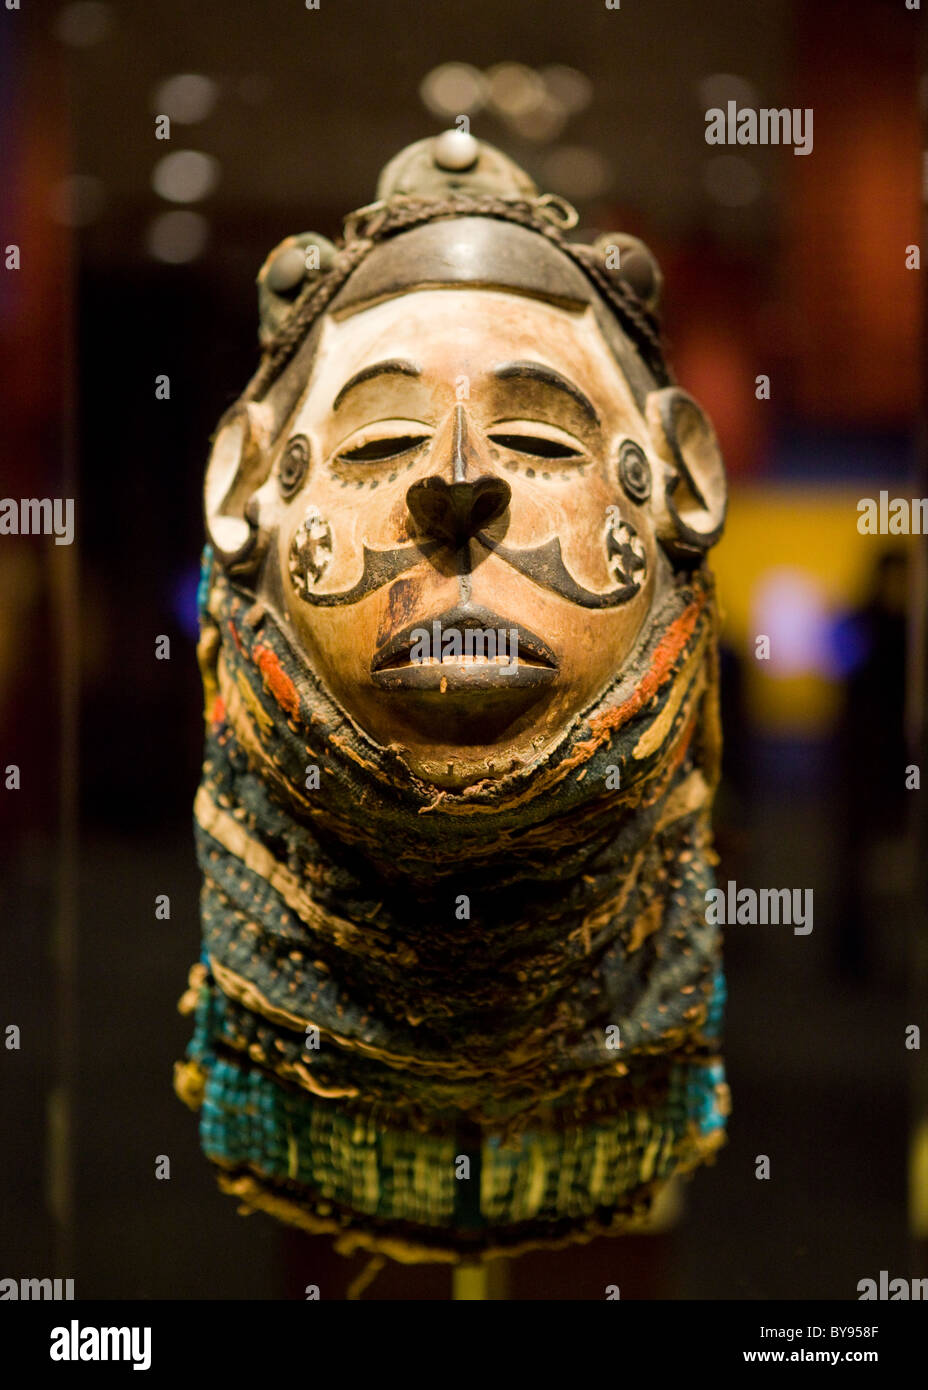 Masque nigérian des Ibos (peuples) masque rituel tribal Banque D'Images